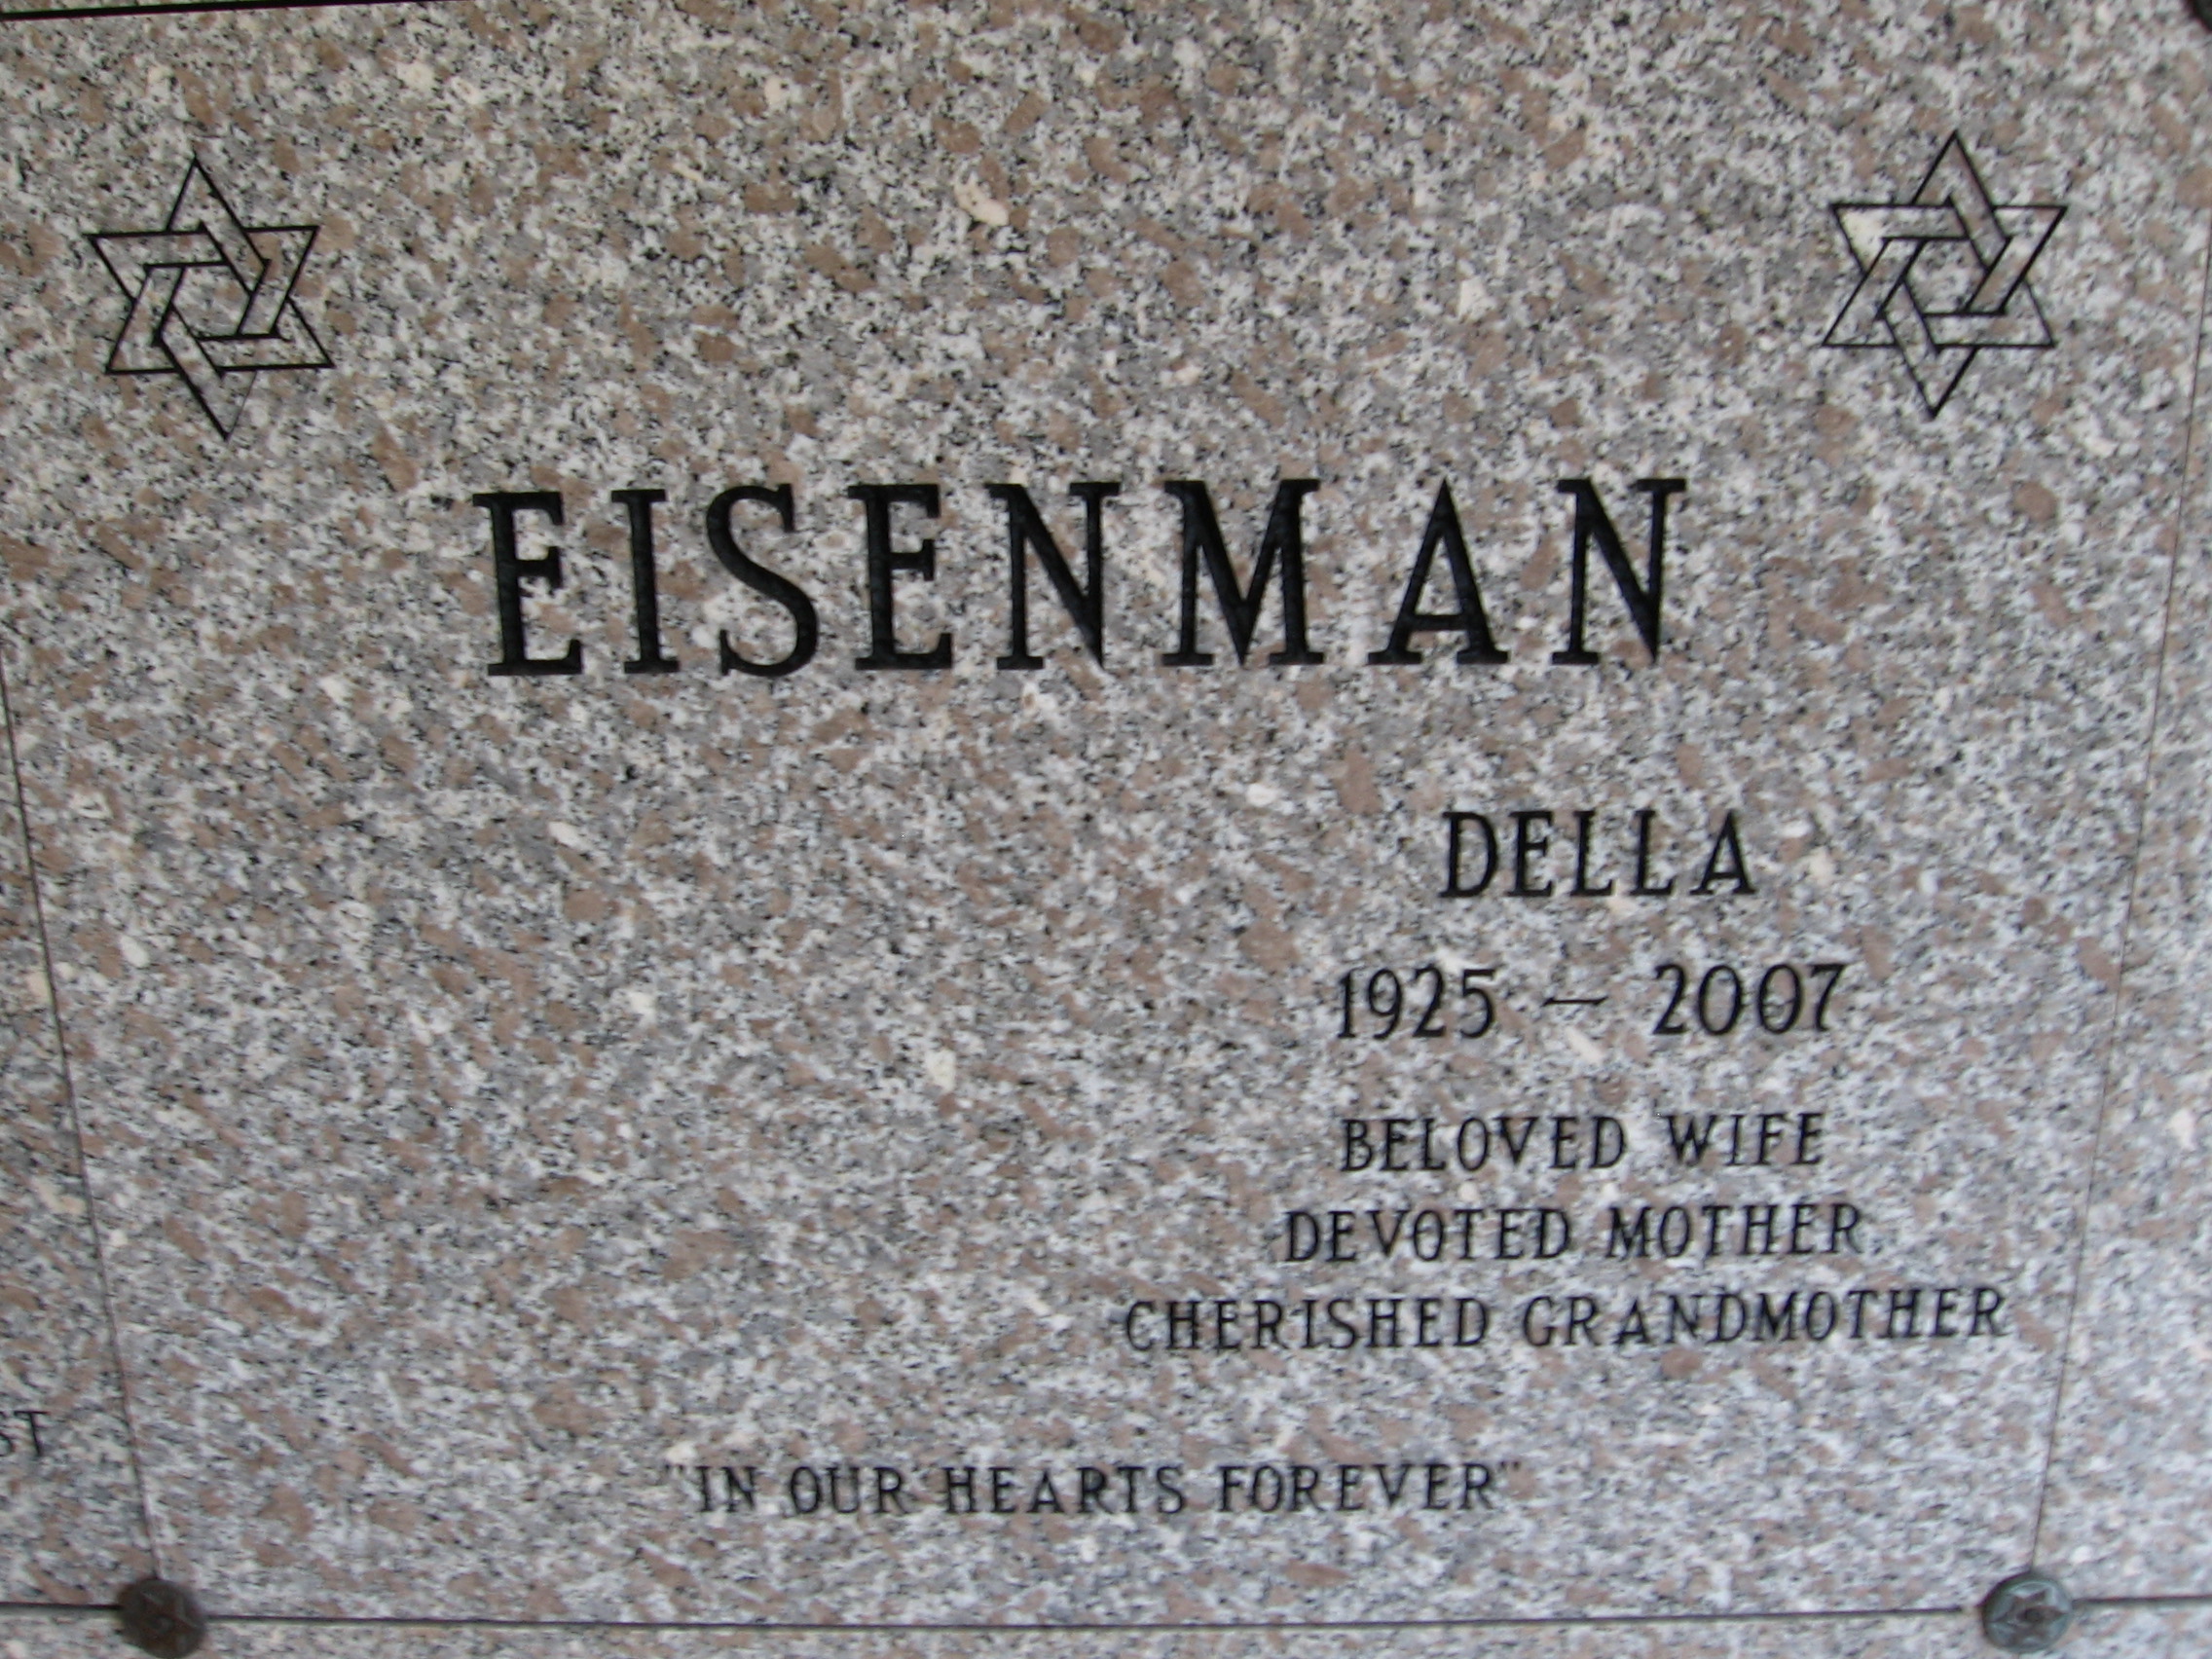 Della Eisenman